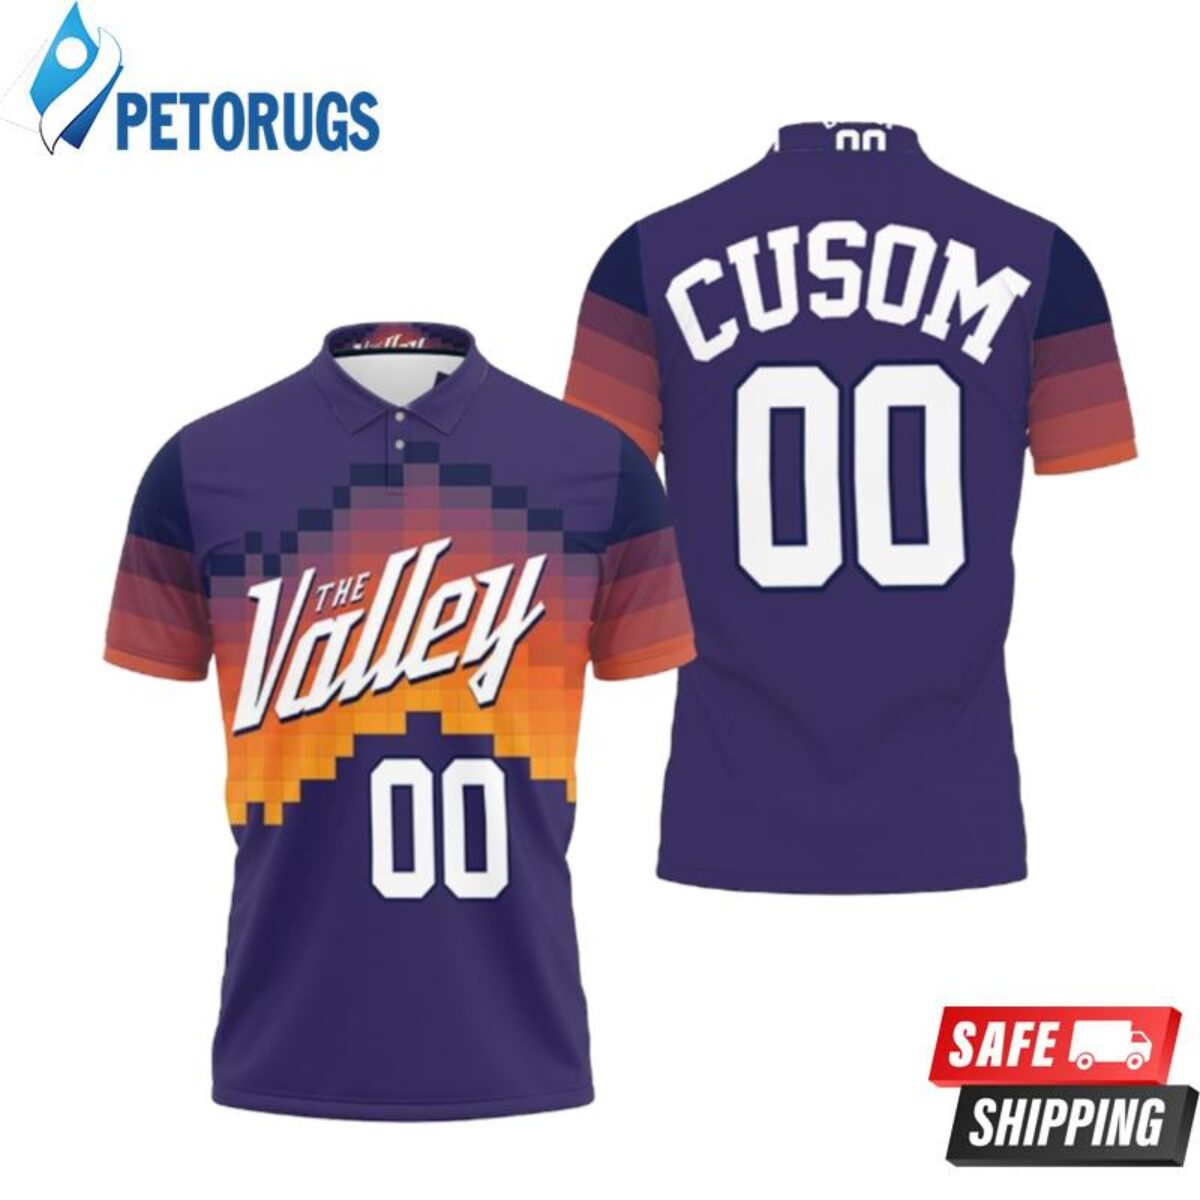 NBA Phoenix Suns Polo Shirts - Peto Rugs